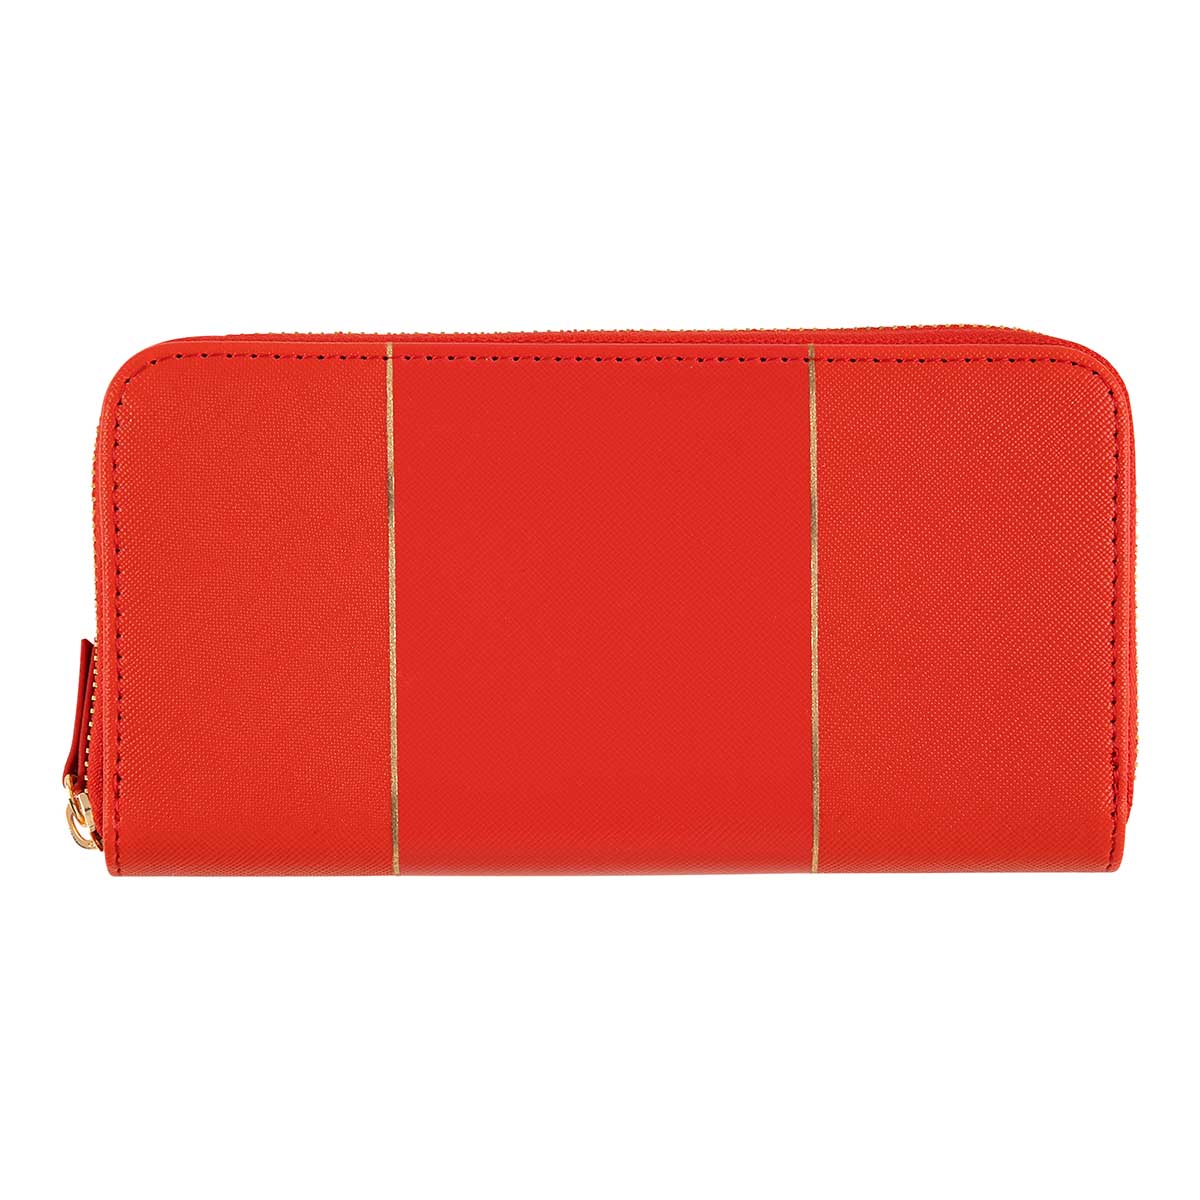 Grand portefeuille femme - rouge